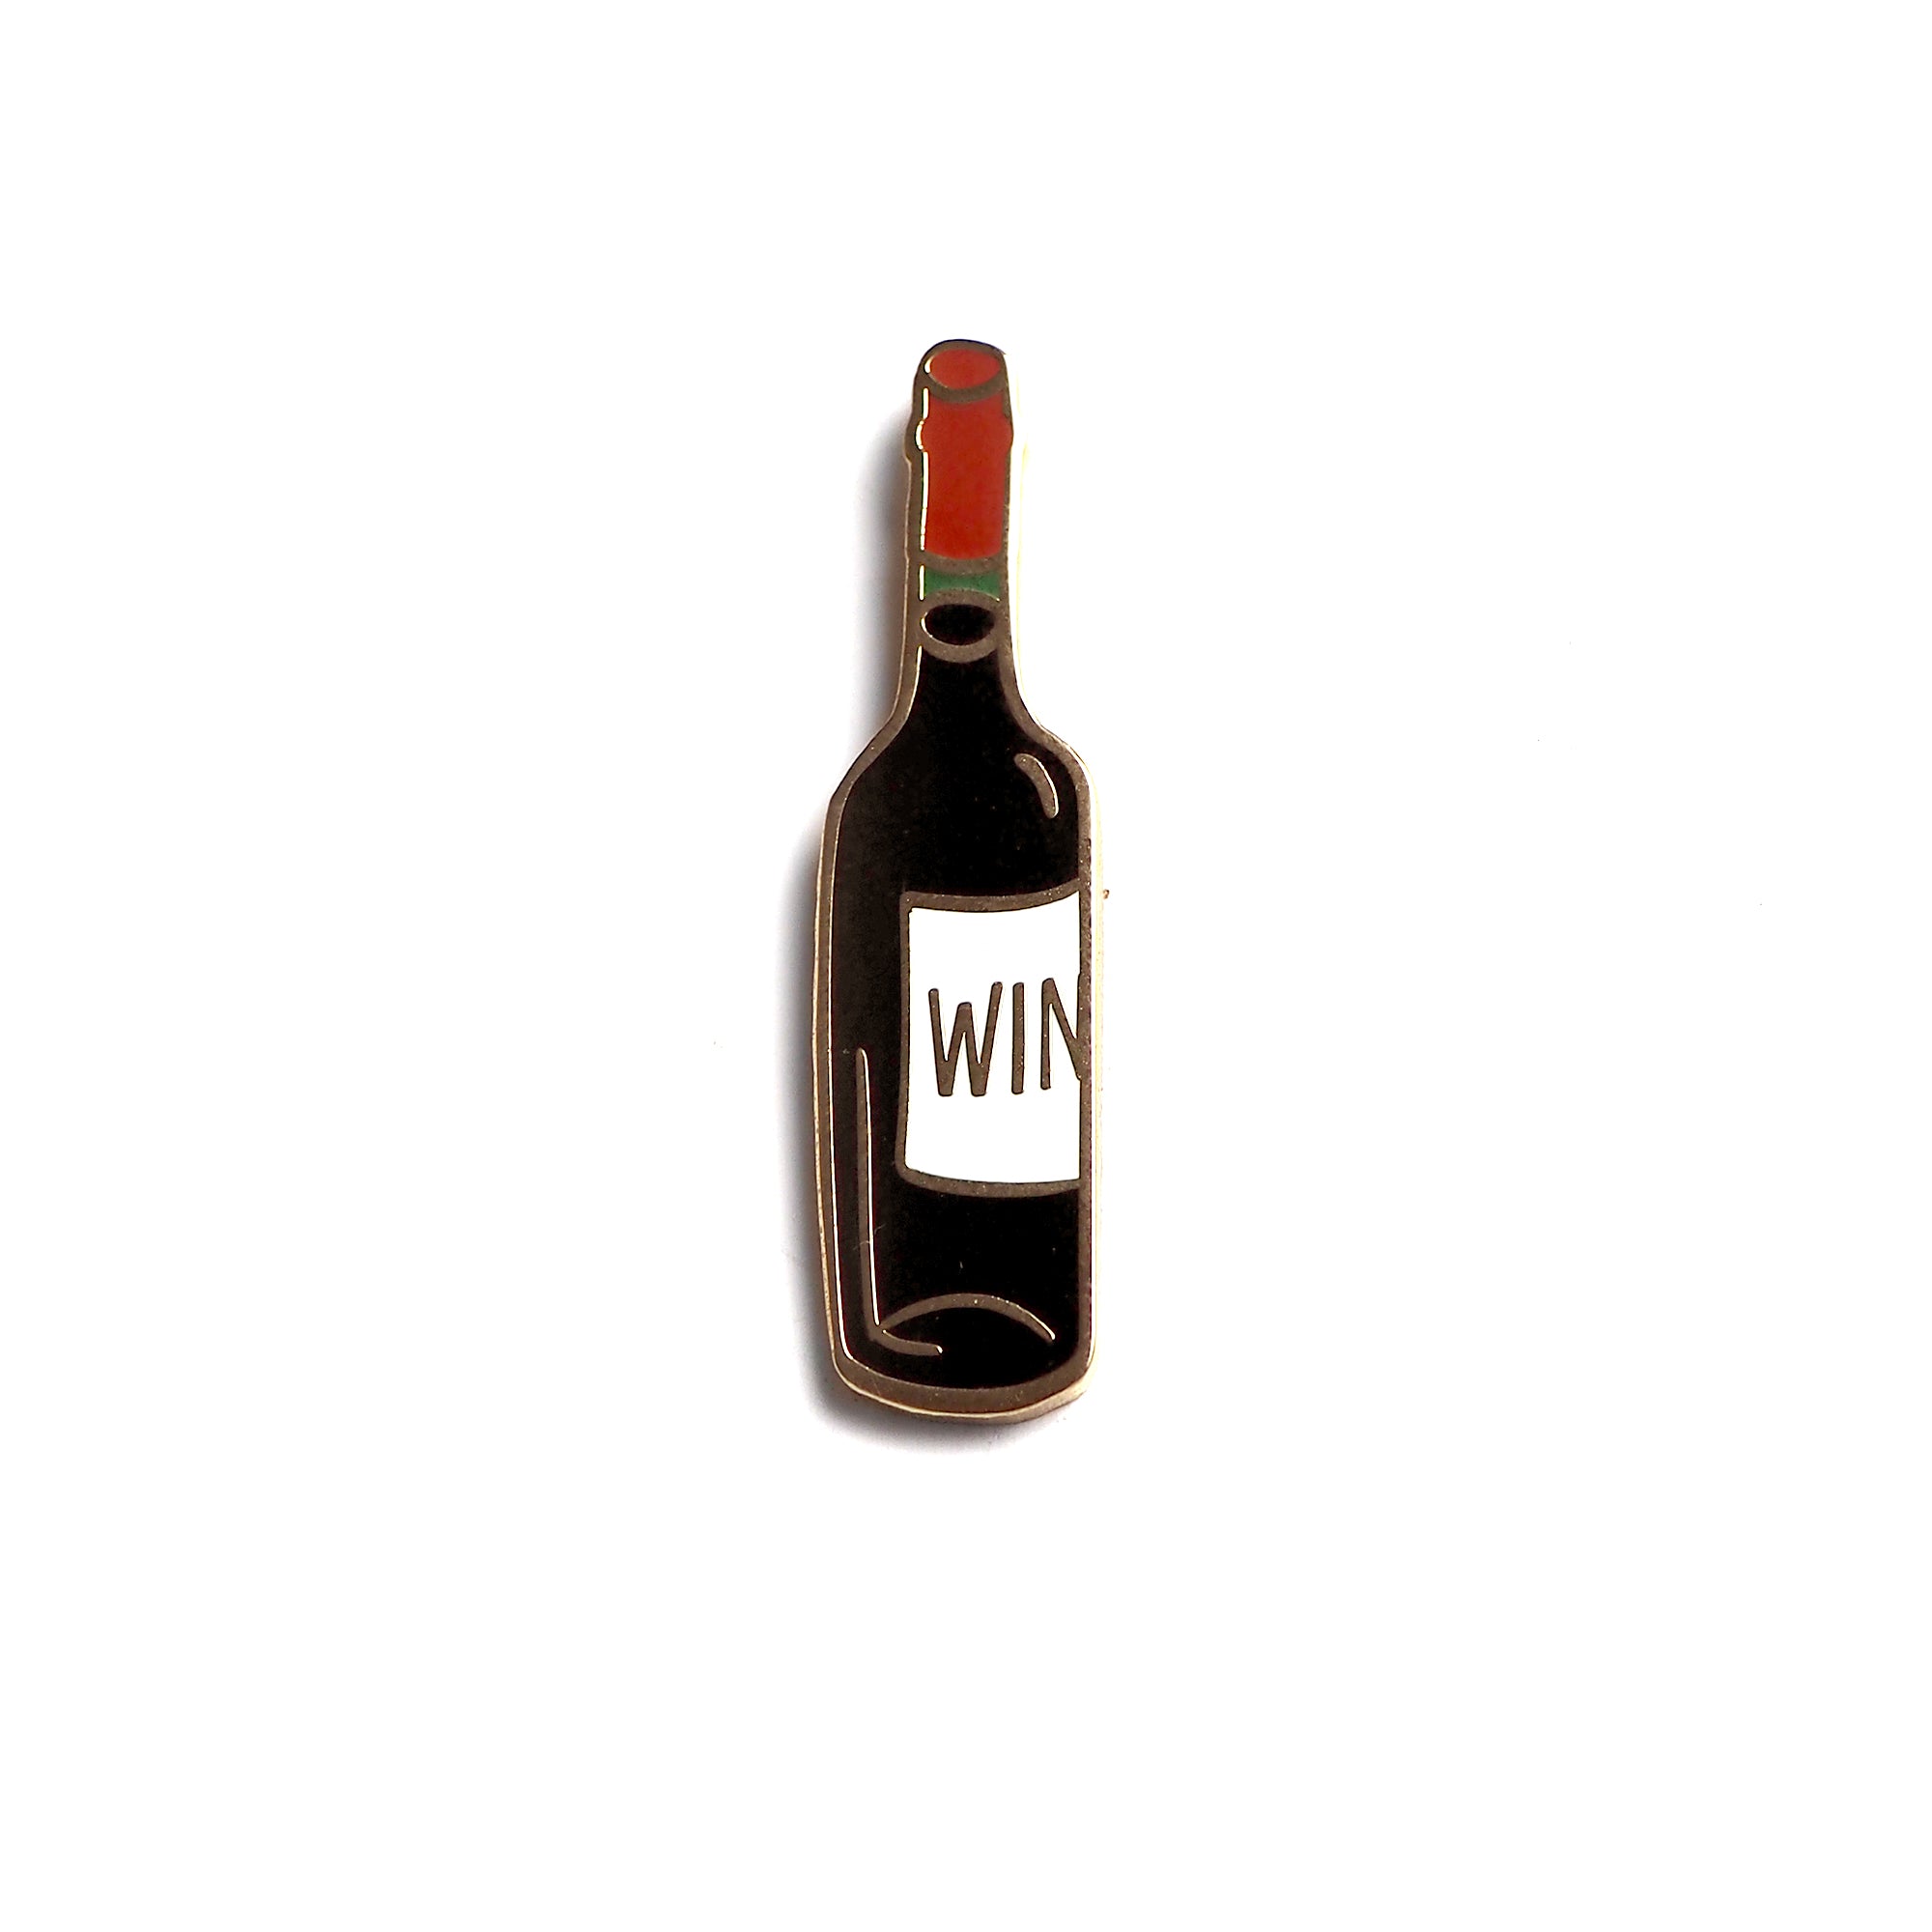 Bor pin / Wine pin